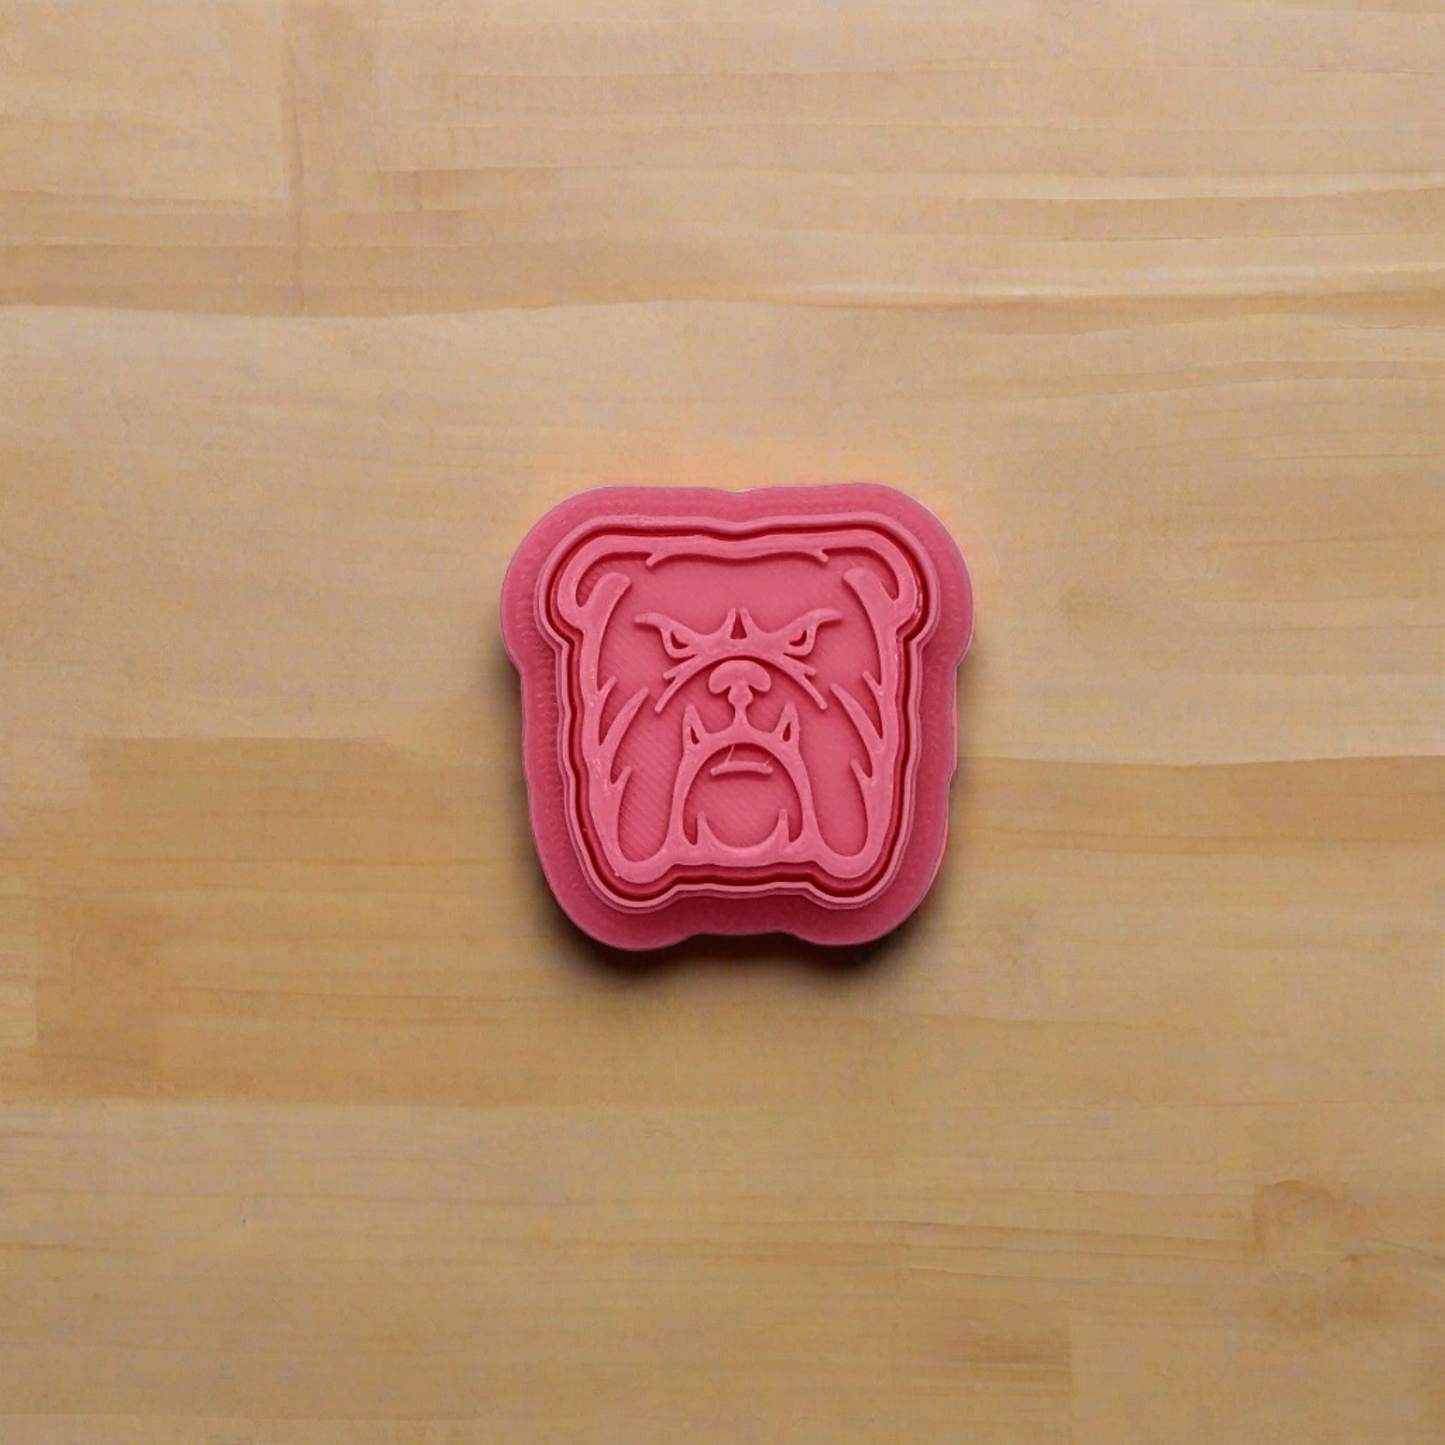 MSU Bulldog Stamp & Cutter Set for Cookies, Ceramics, Pottery, Polymer Clay, Fondant - Multi-Medium Craft & Baking Tool